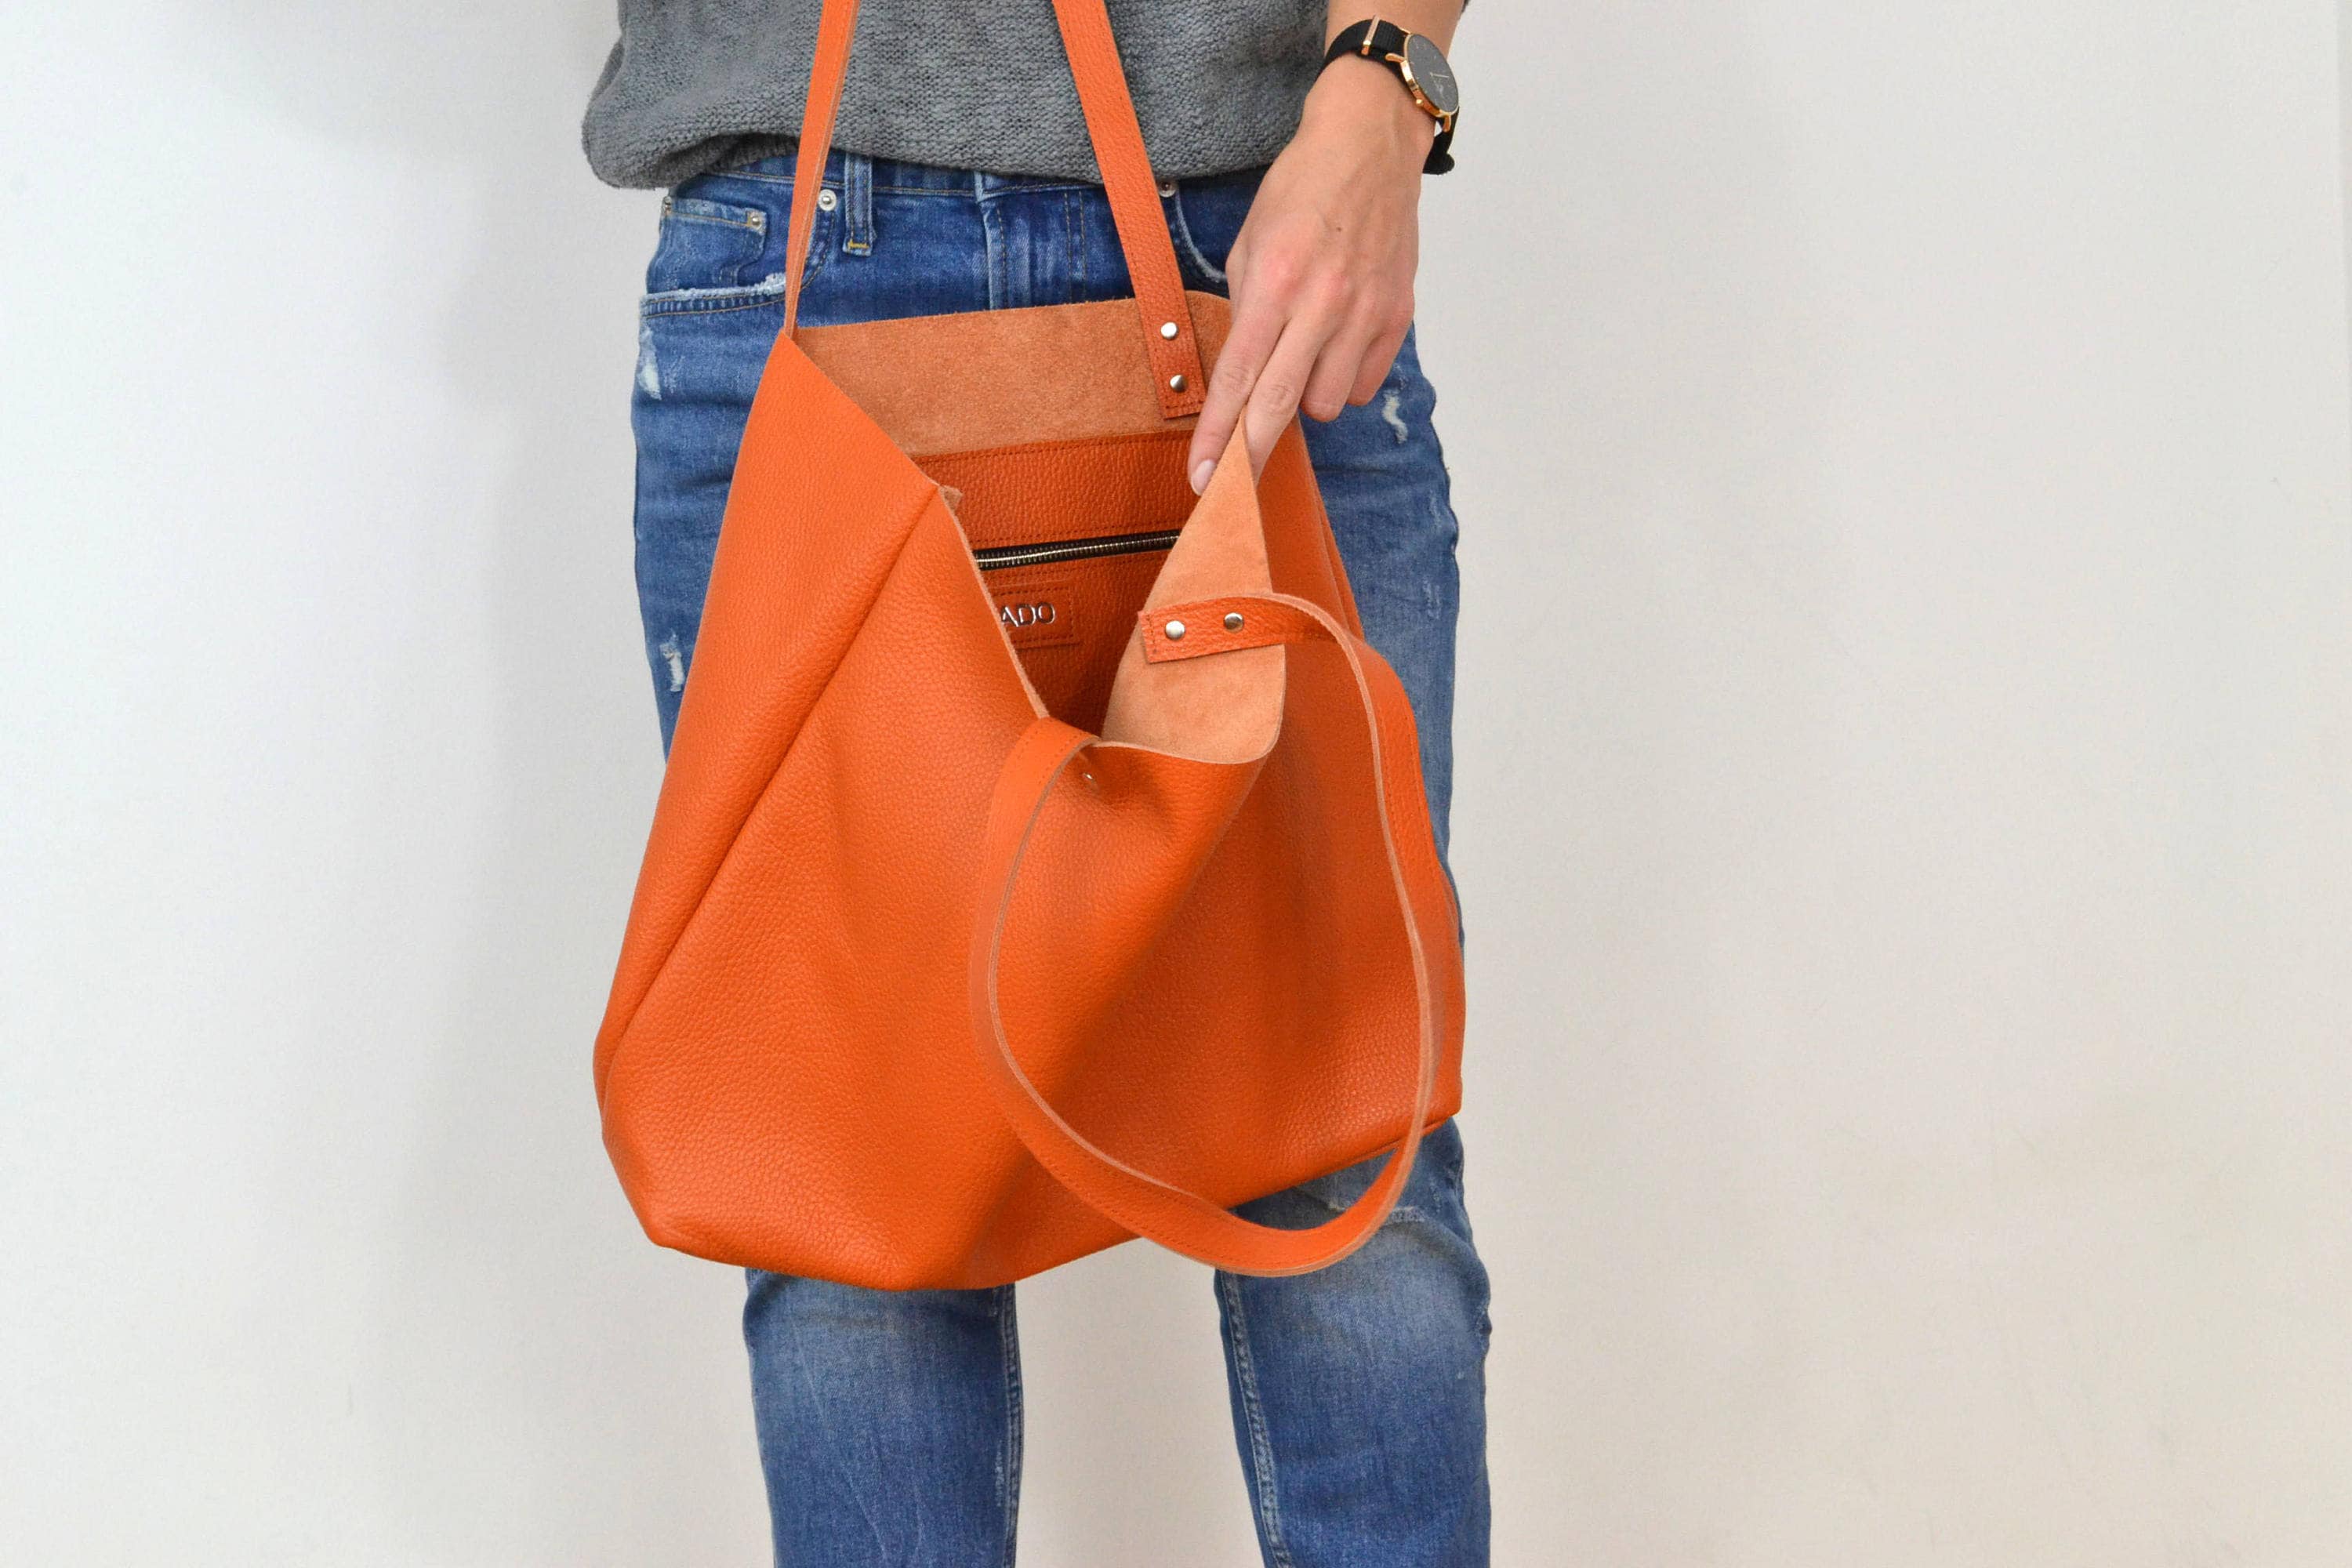 Piazza Edition Jasmina Shoulder Bag in Brown/Black/Orange - in the